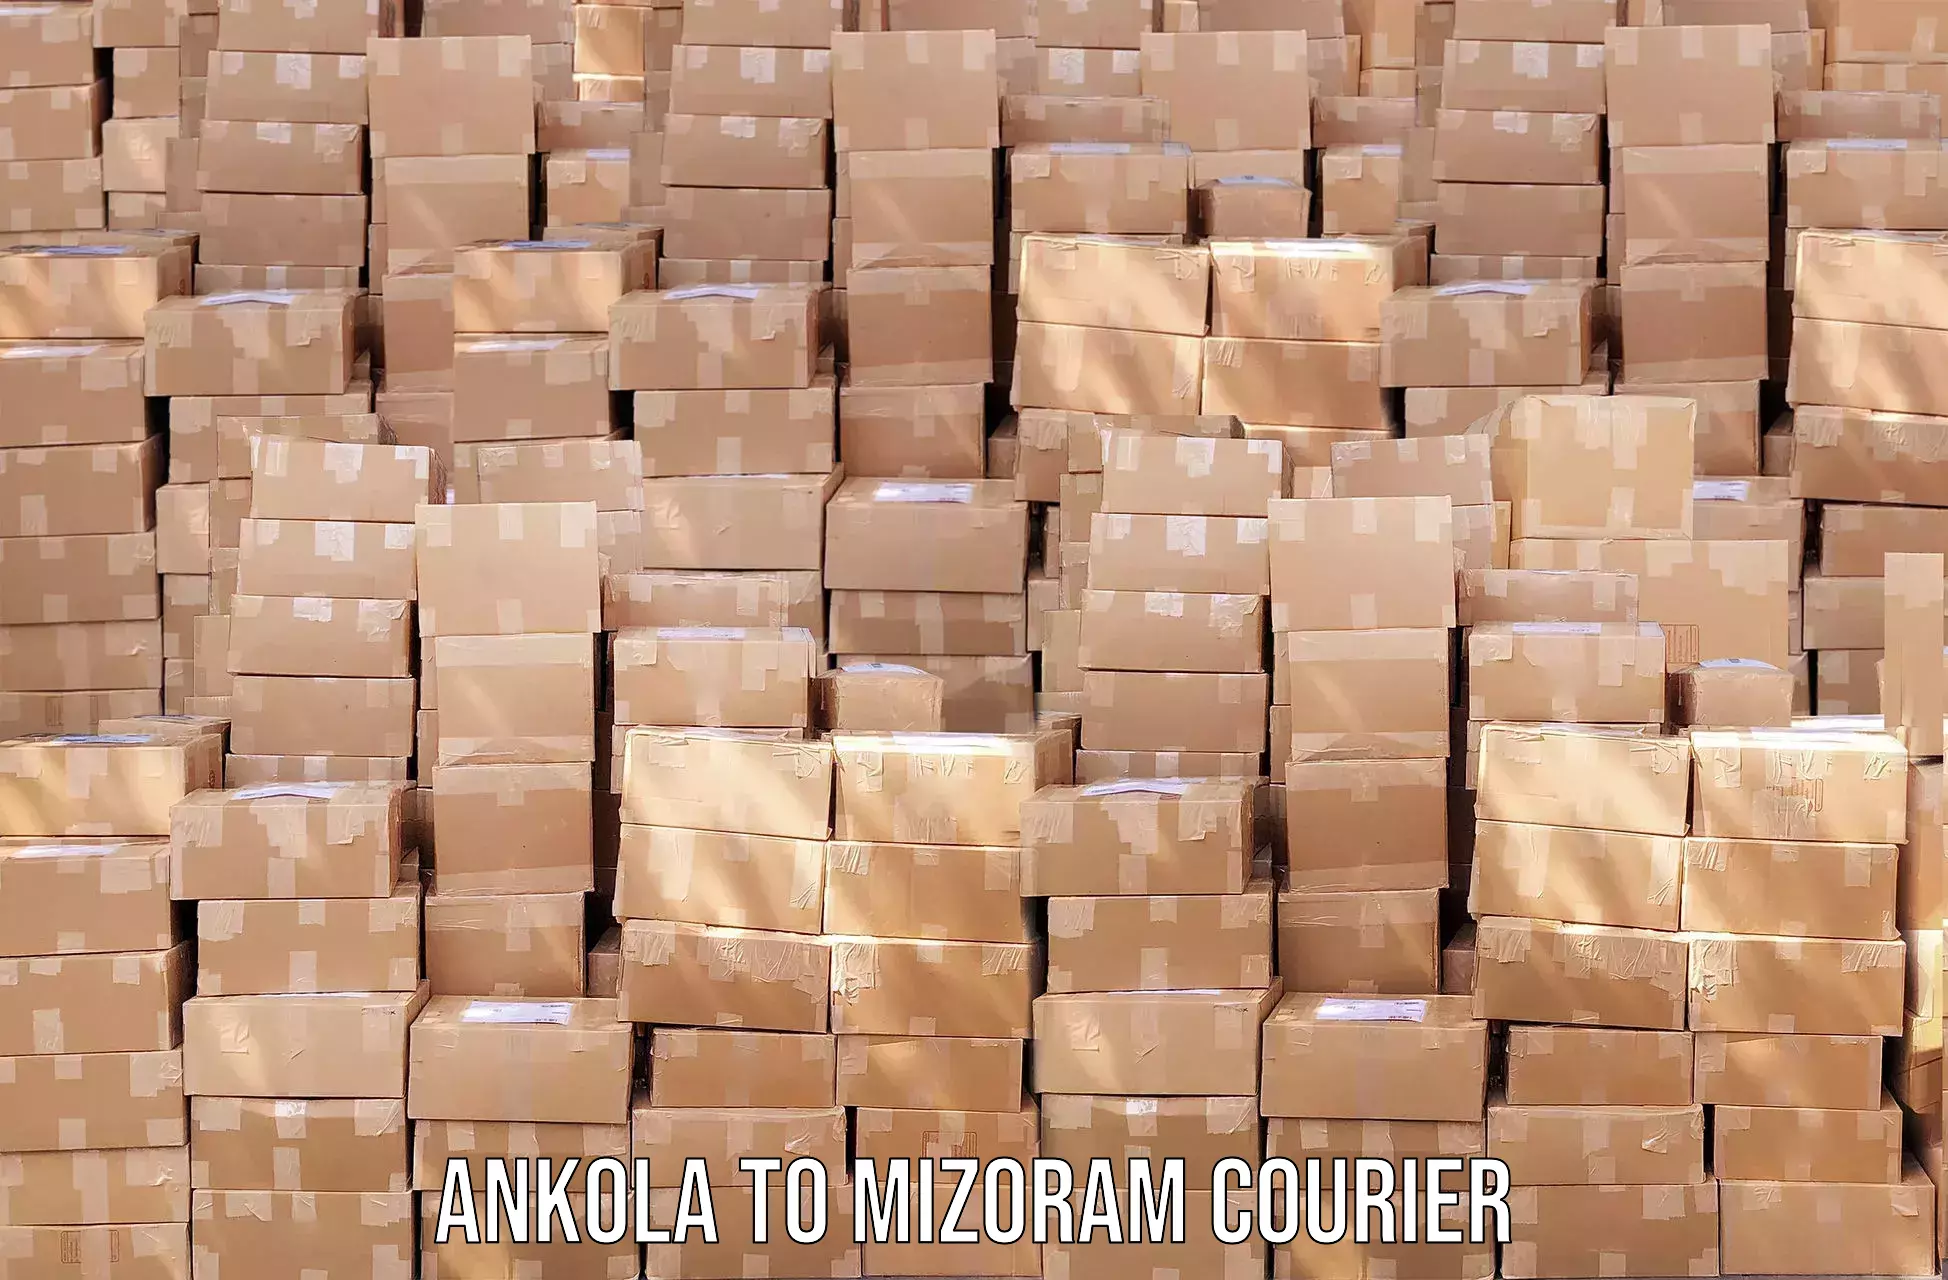 Package tracking Ankola to Mizoram